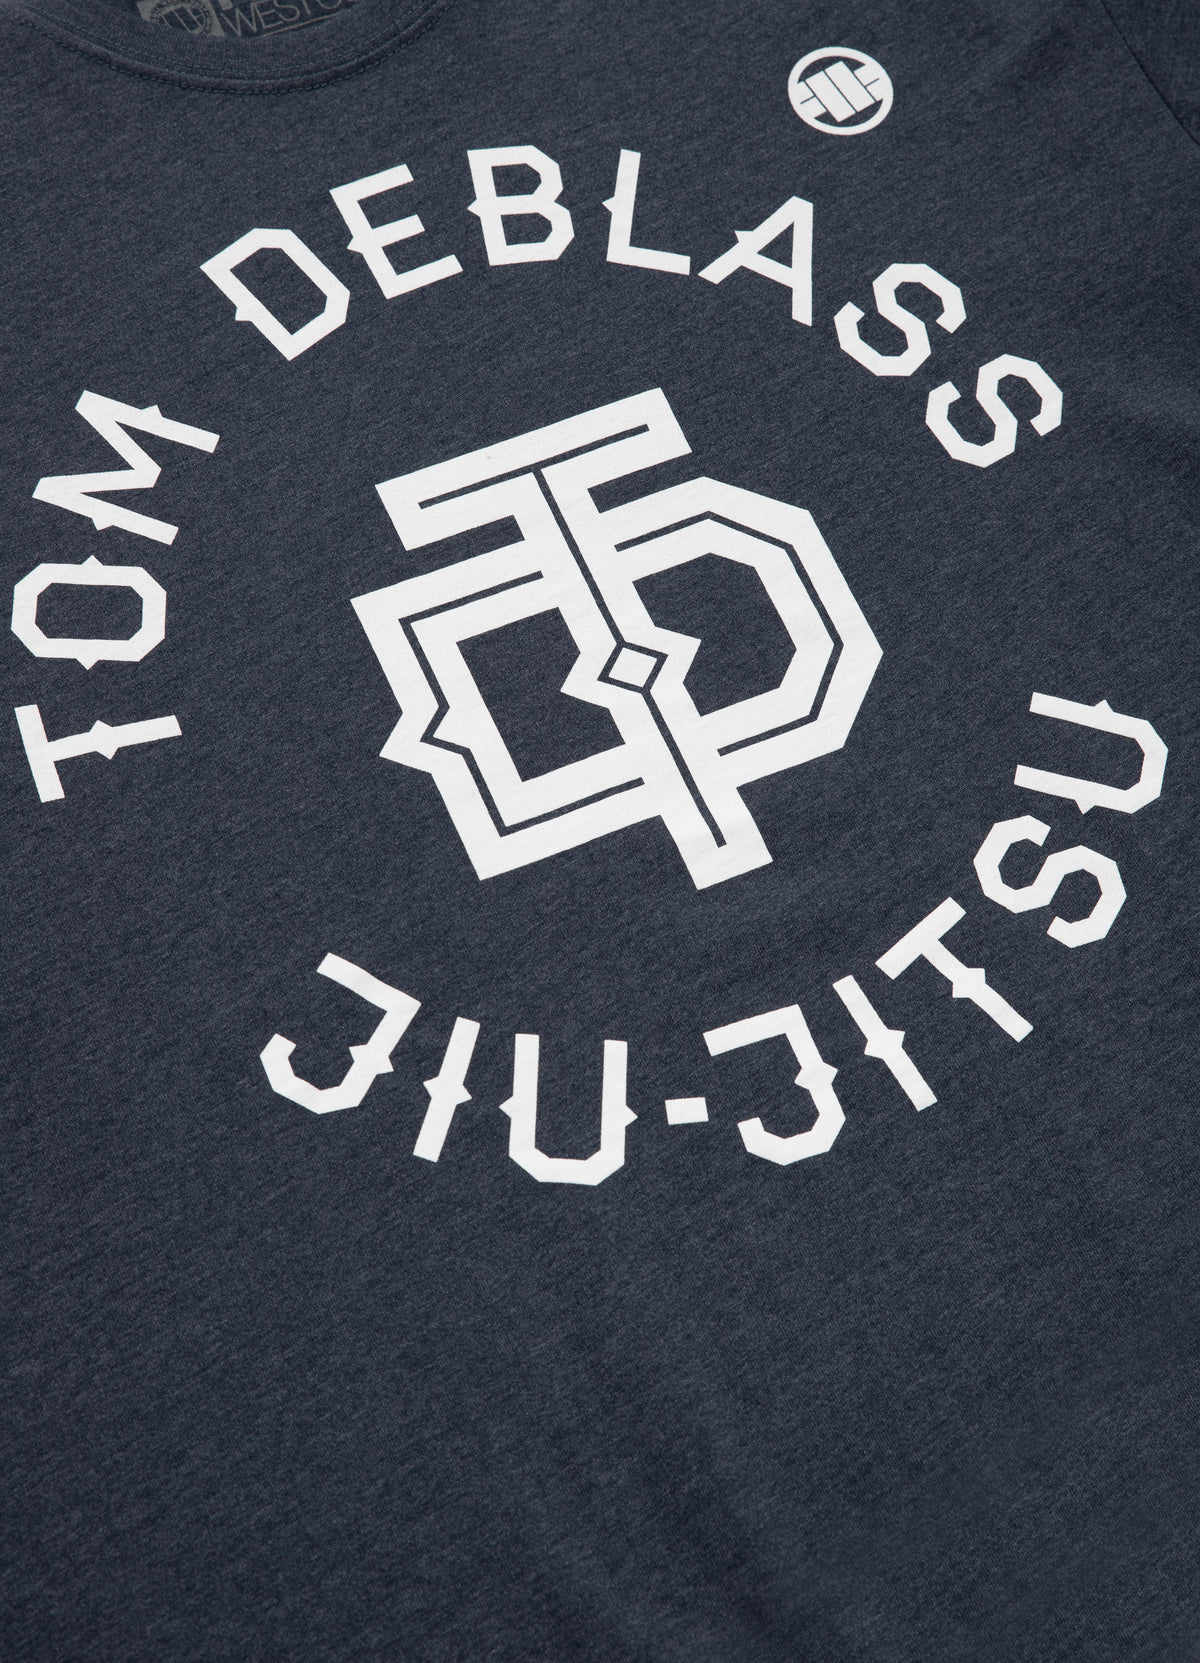 TOM DEBLASS T-Shirt Navy Melange